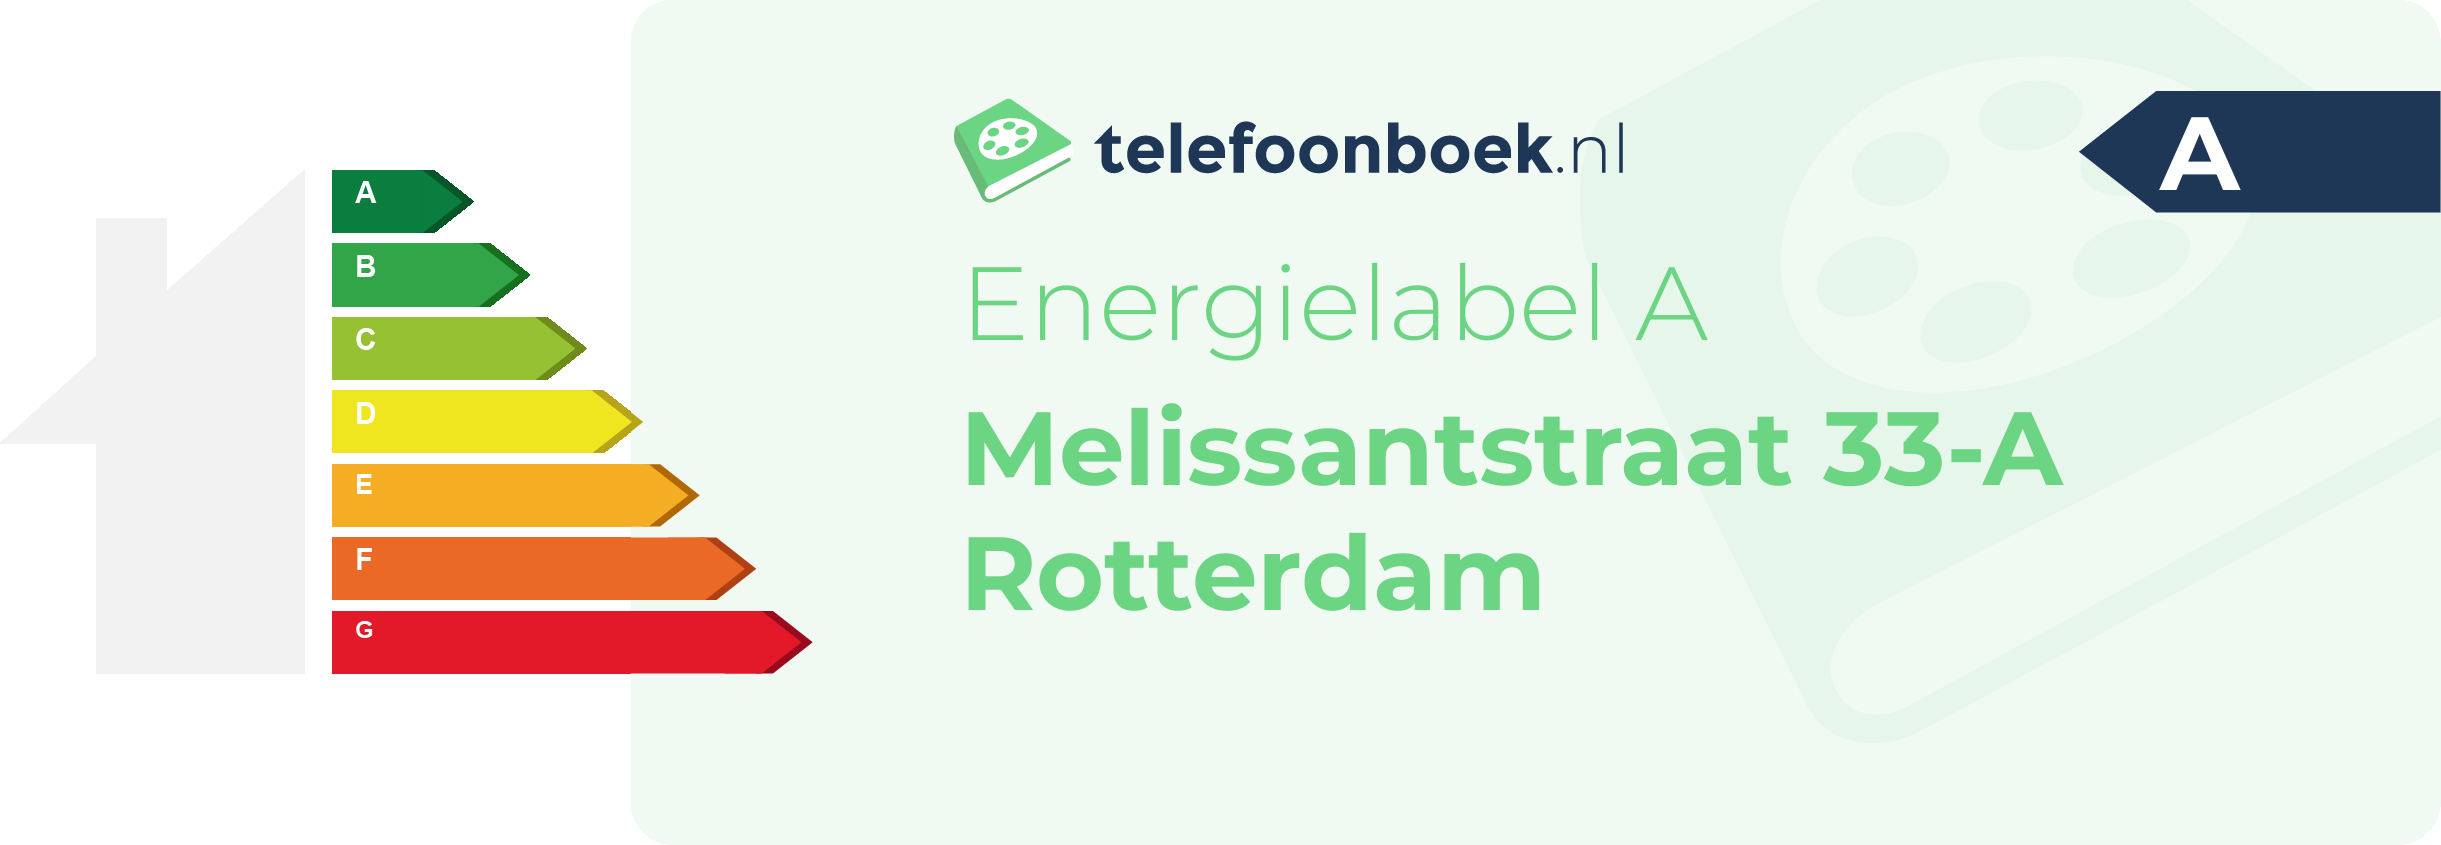 Energielabel Melissantstraat 33-A Rotterdam